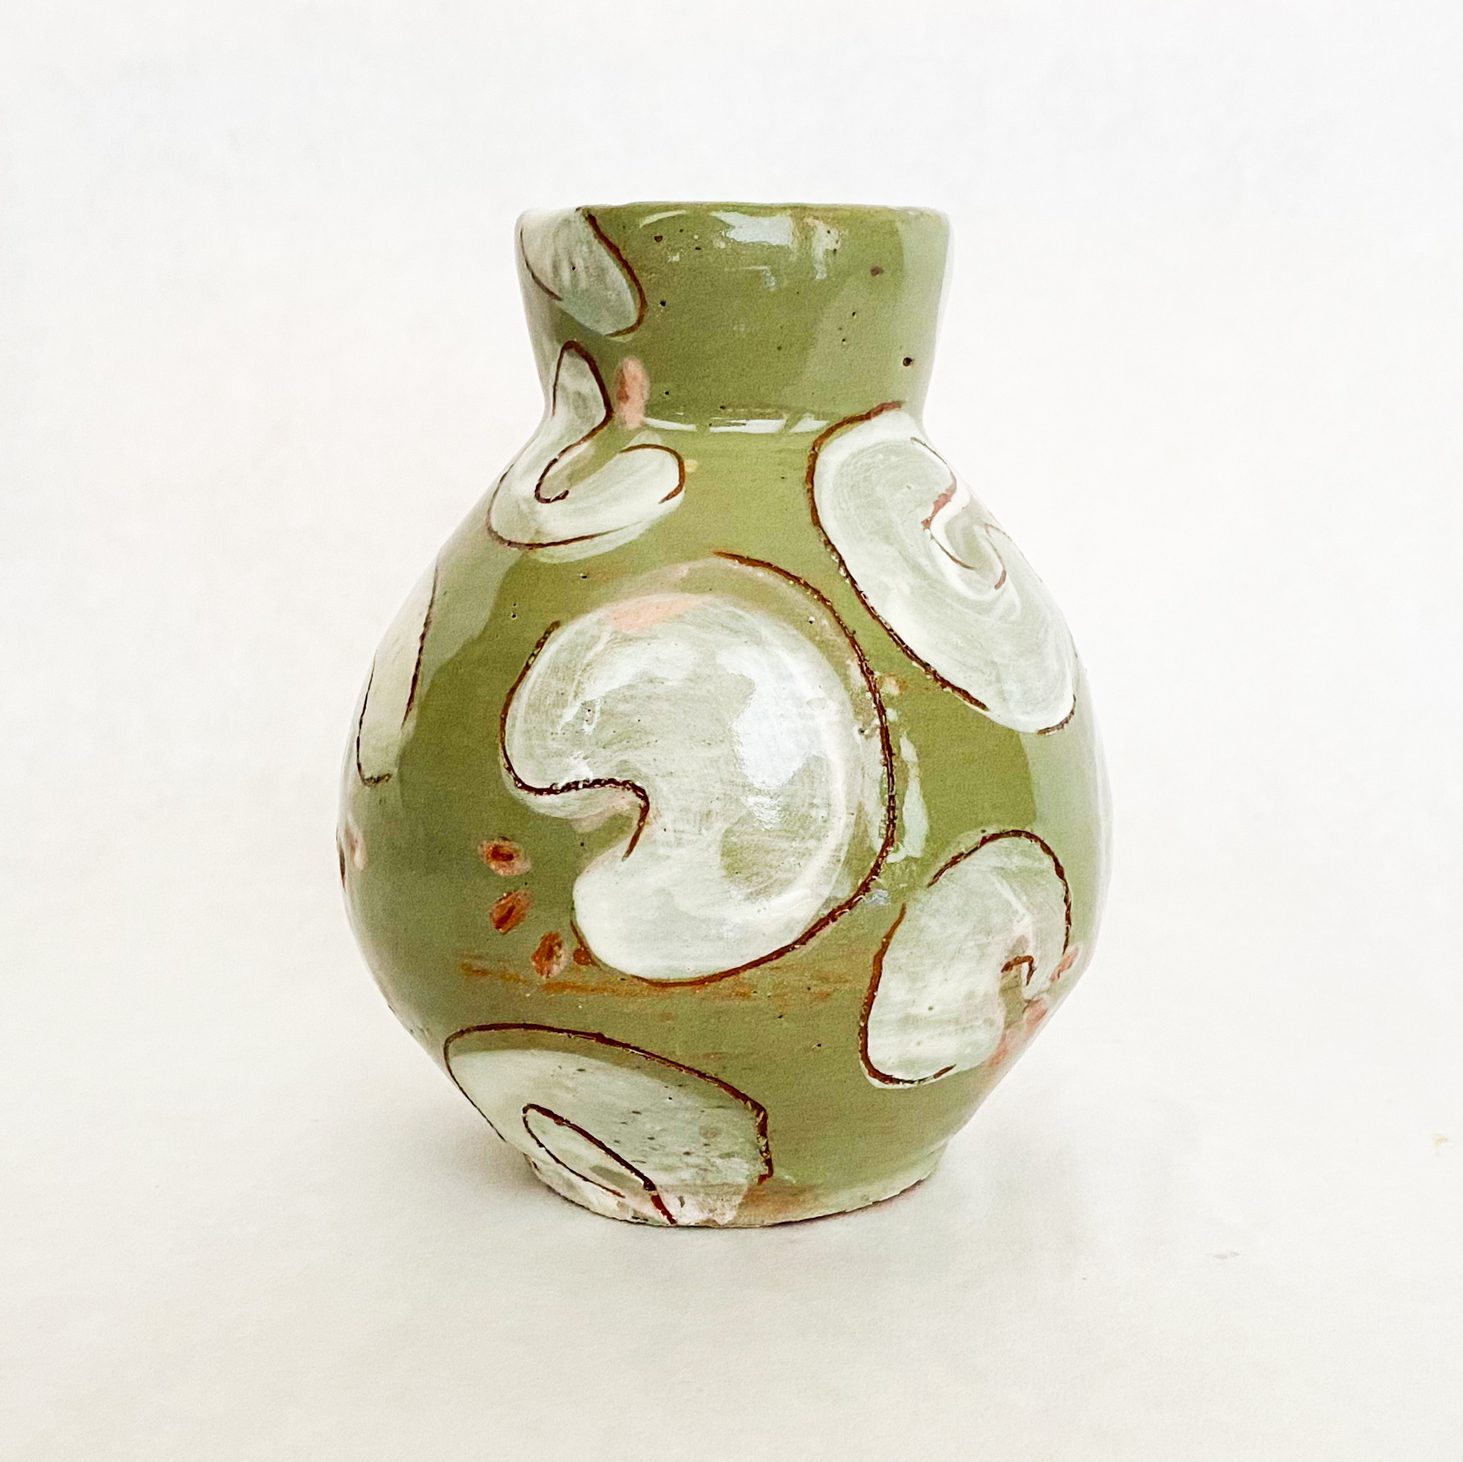 Ceramic piece by Art and Design Student Katie Valeria